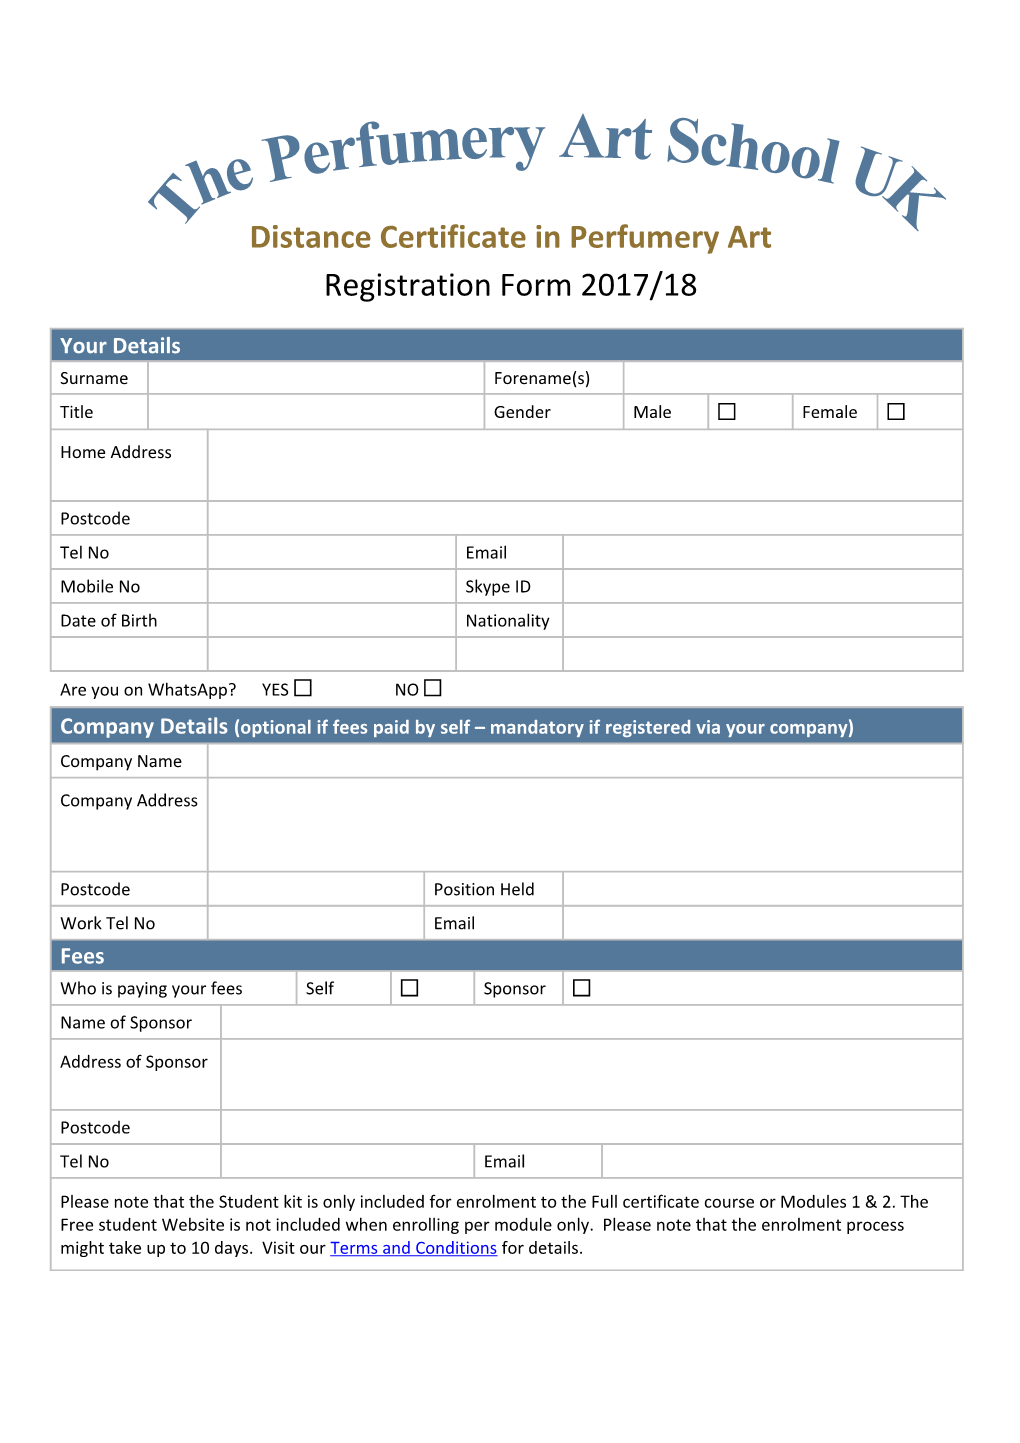 Distance Certificate in Perfumery Art Registration Form 2017/18